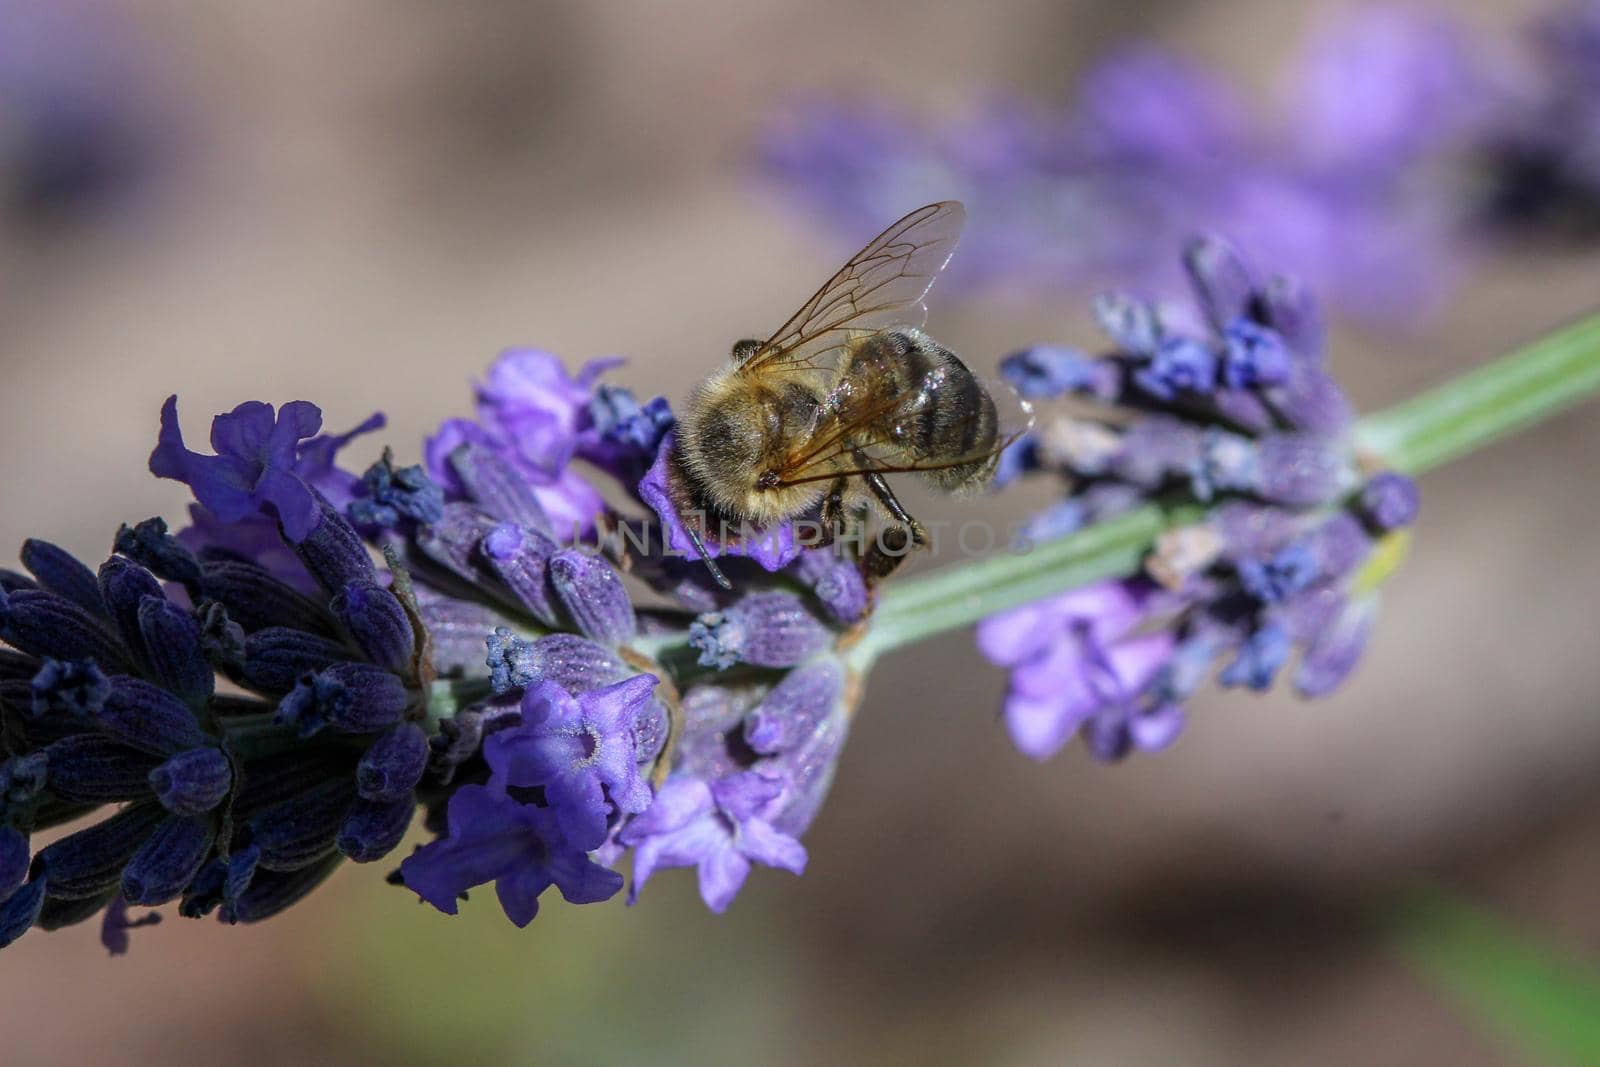 Flying bee near lavender flower by reinerc